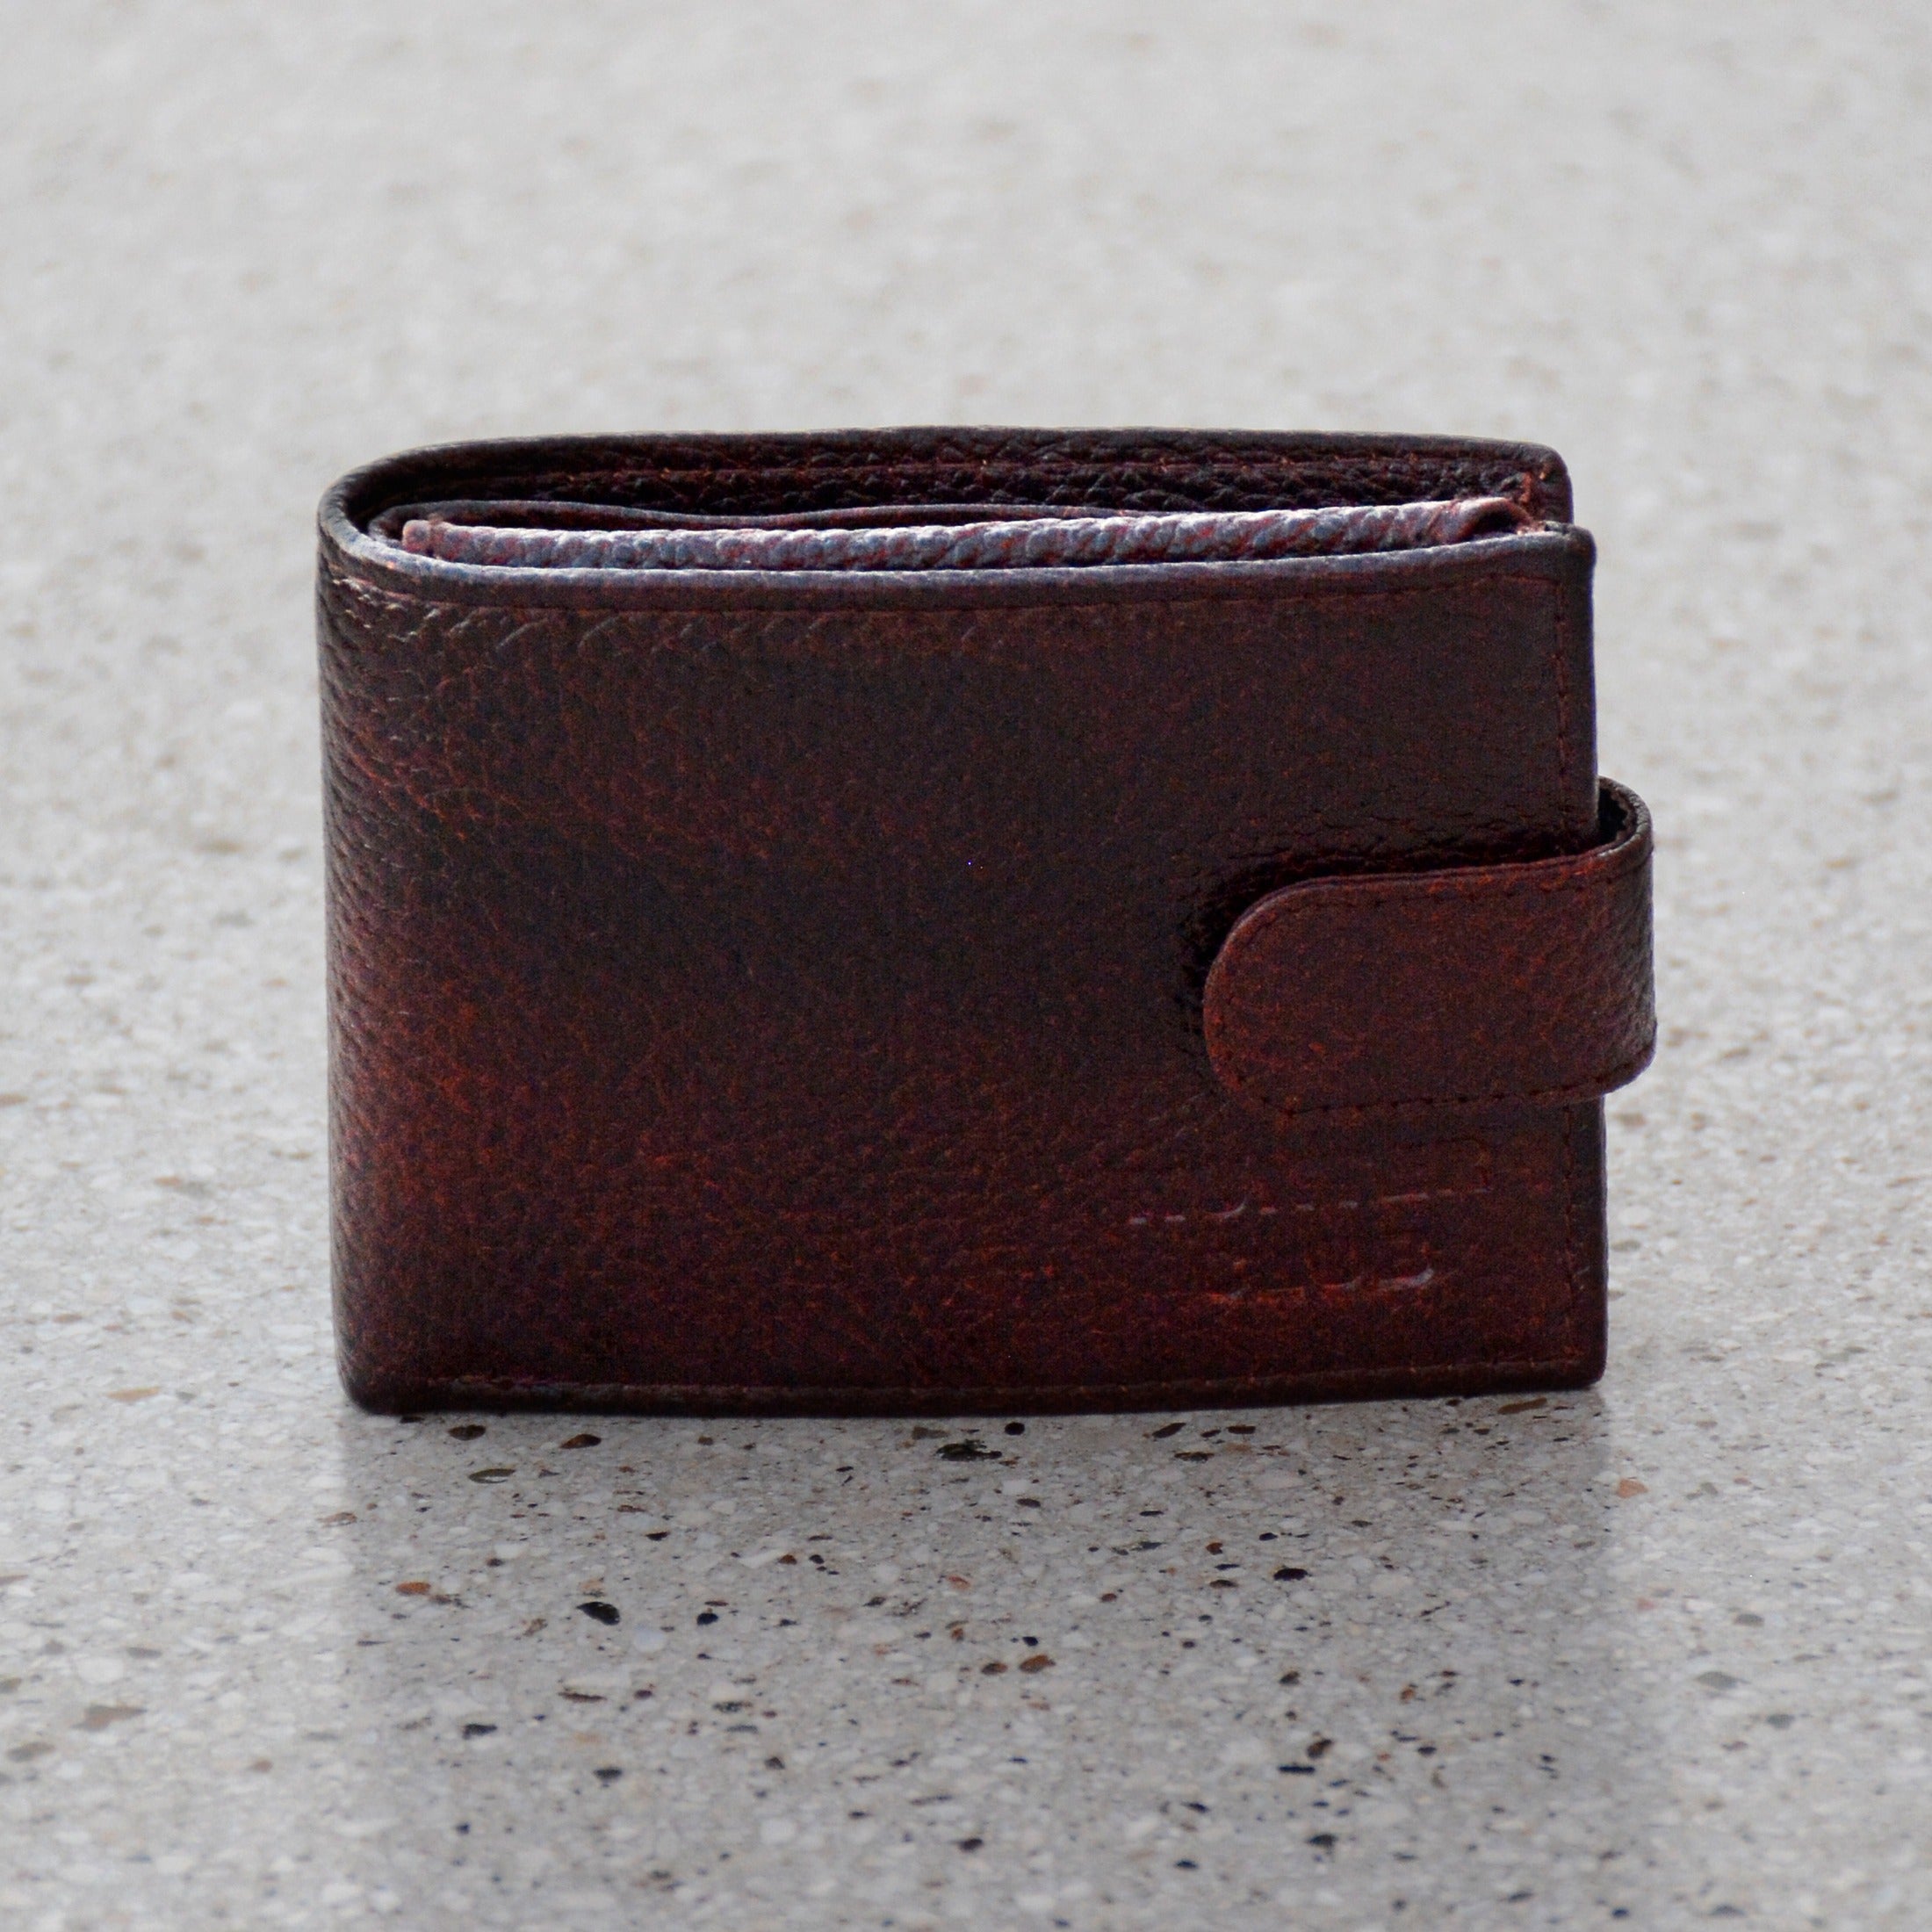 Men's Genuine Leather Wallet | 2 Fold Button Wallet WLT0003